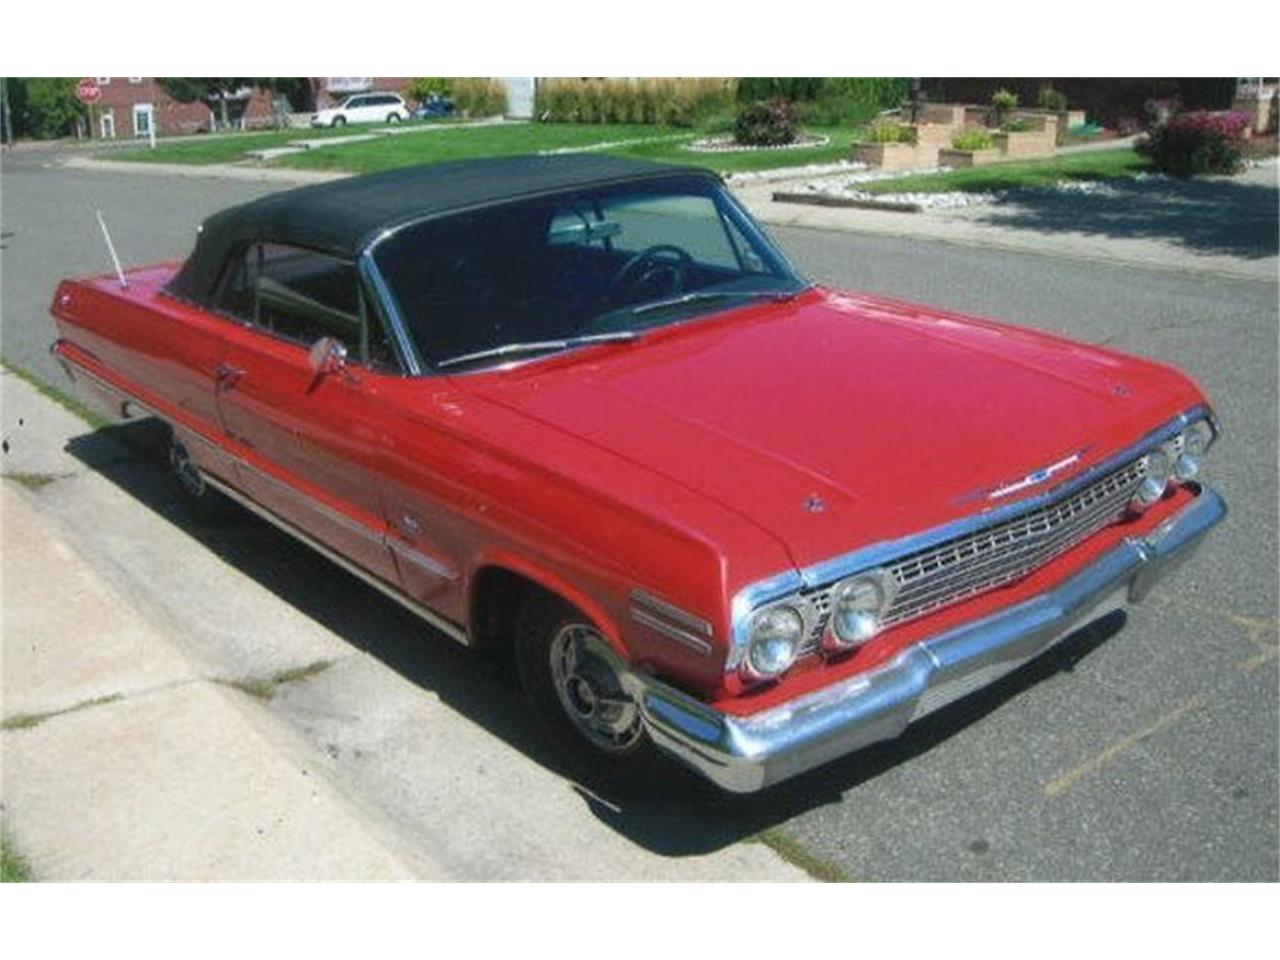 1962 chevy impala conv